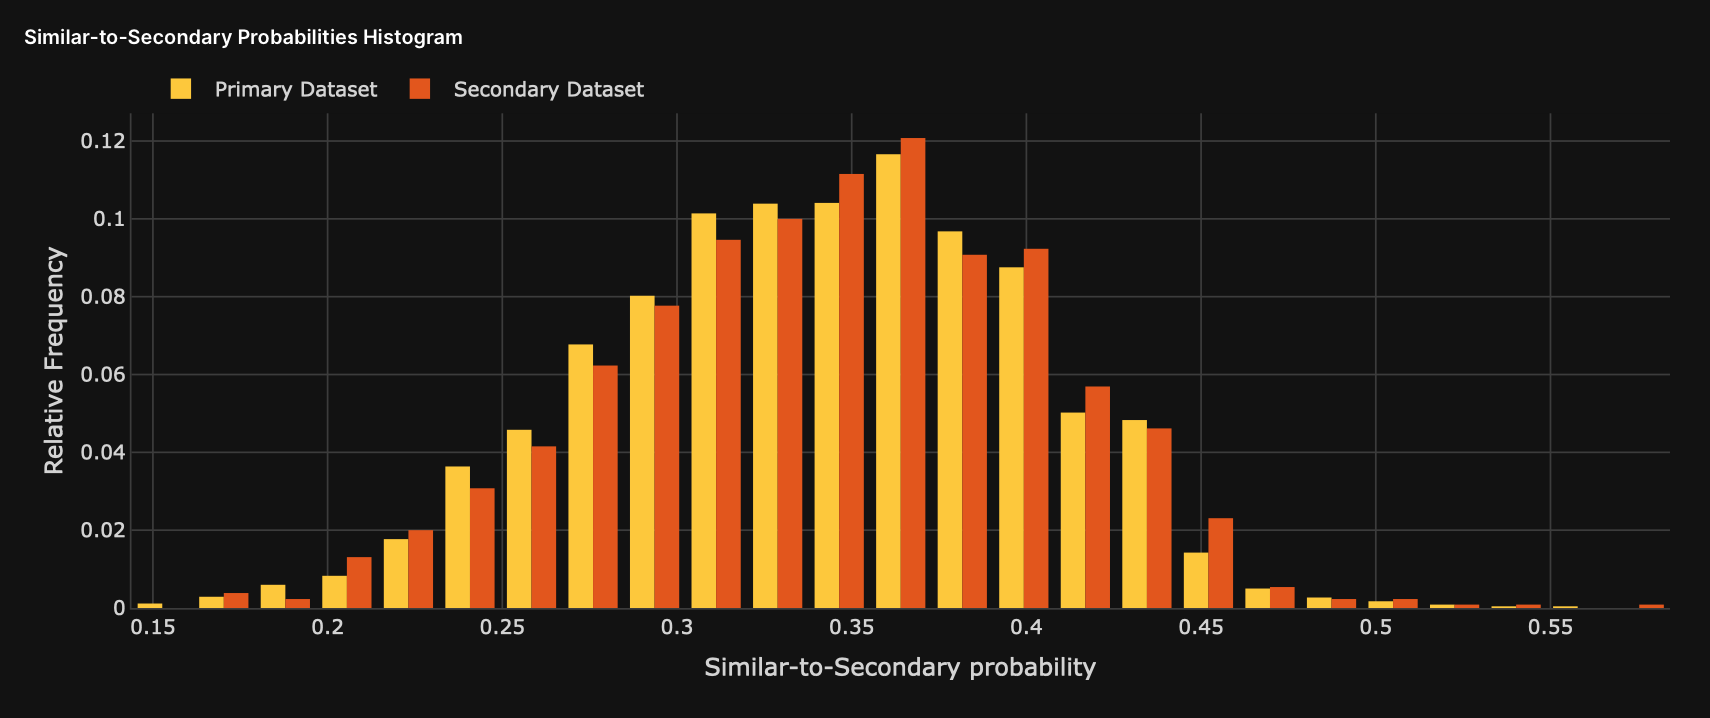 probability of belonging to Secondary Dataset